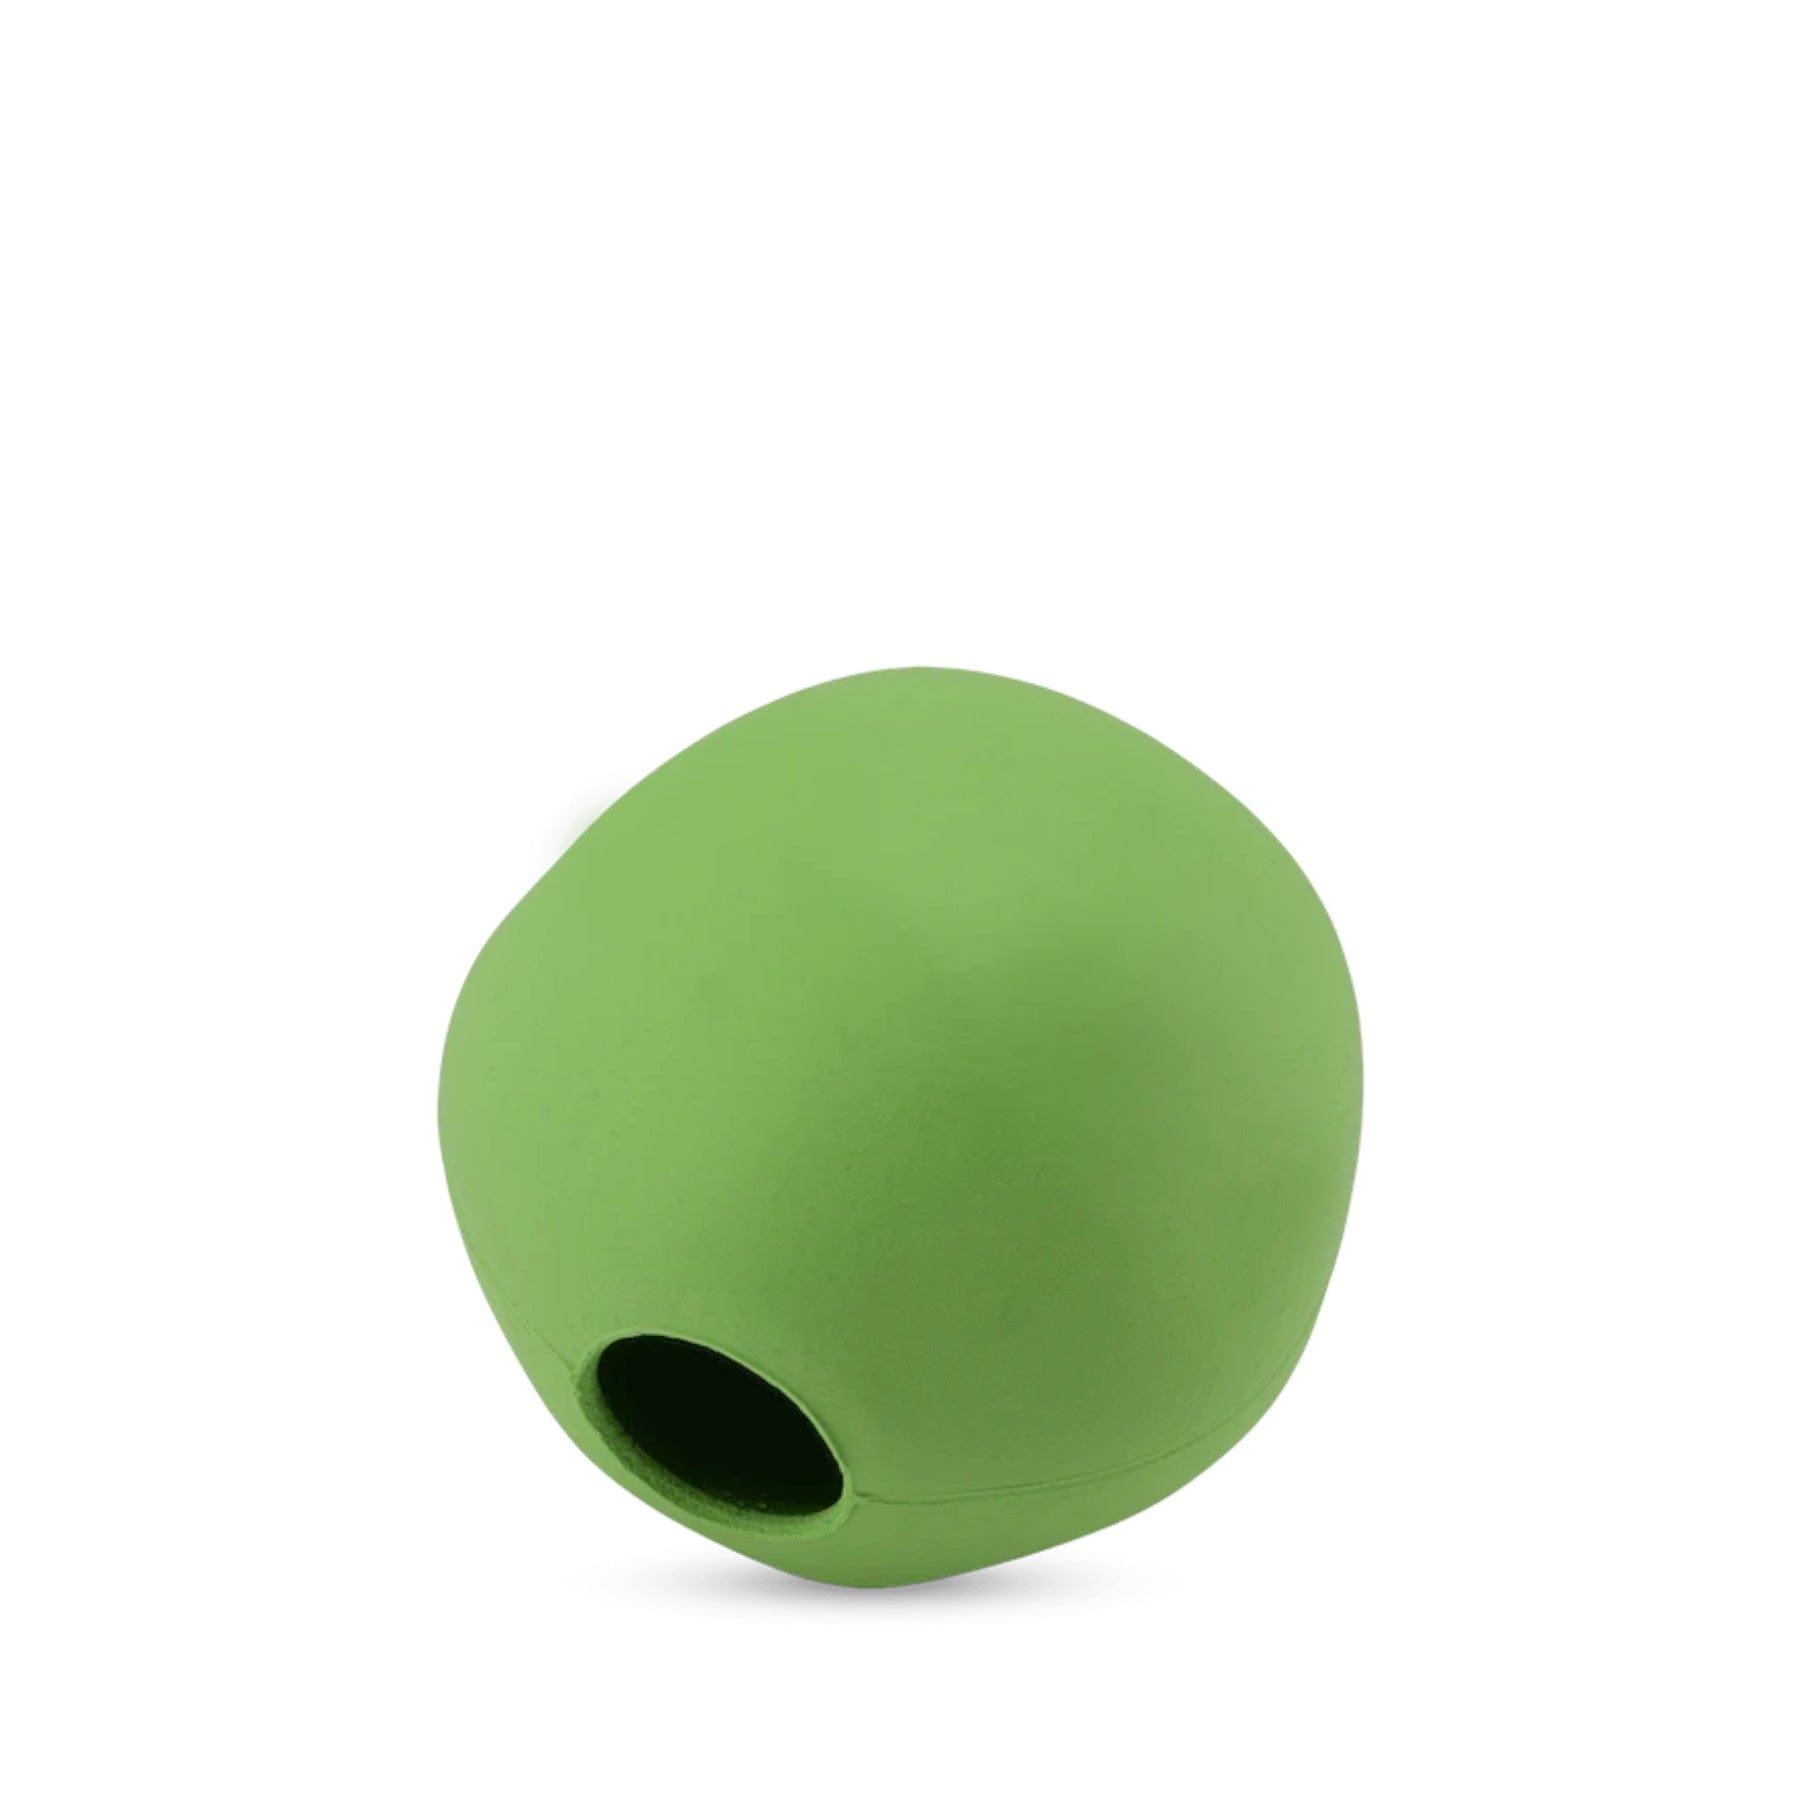 Natural rubber treat ball